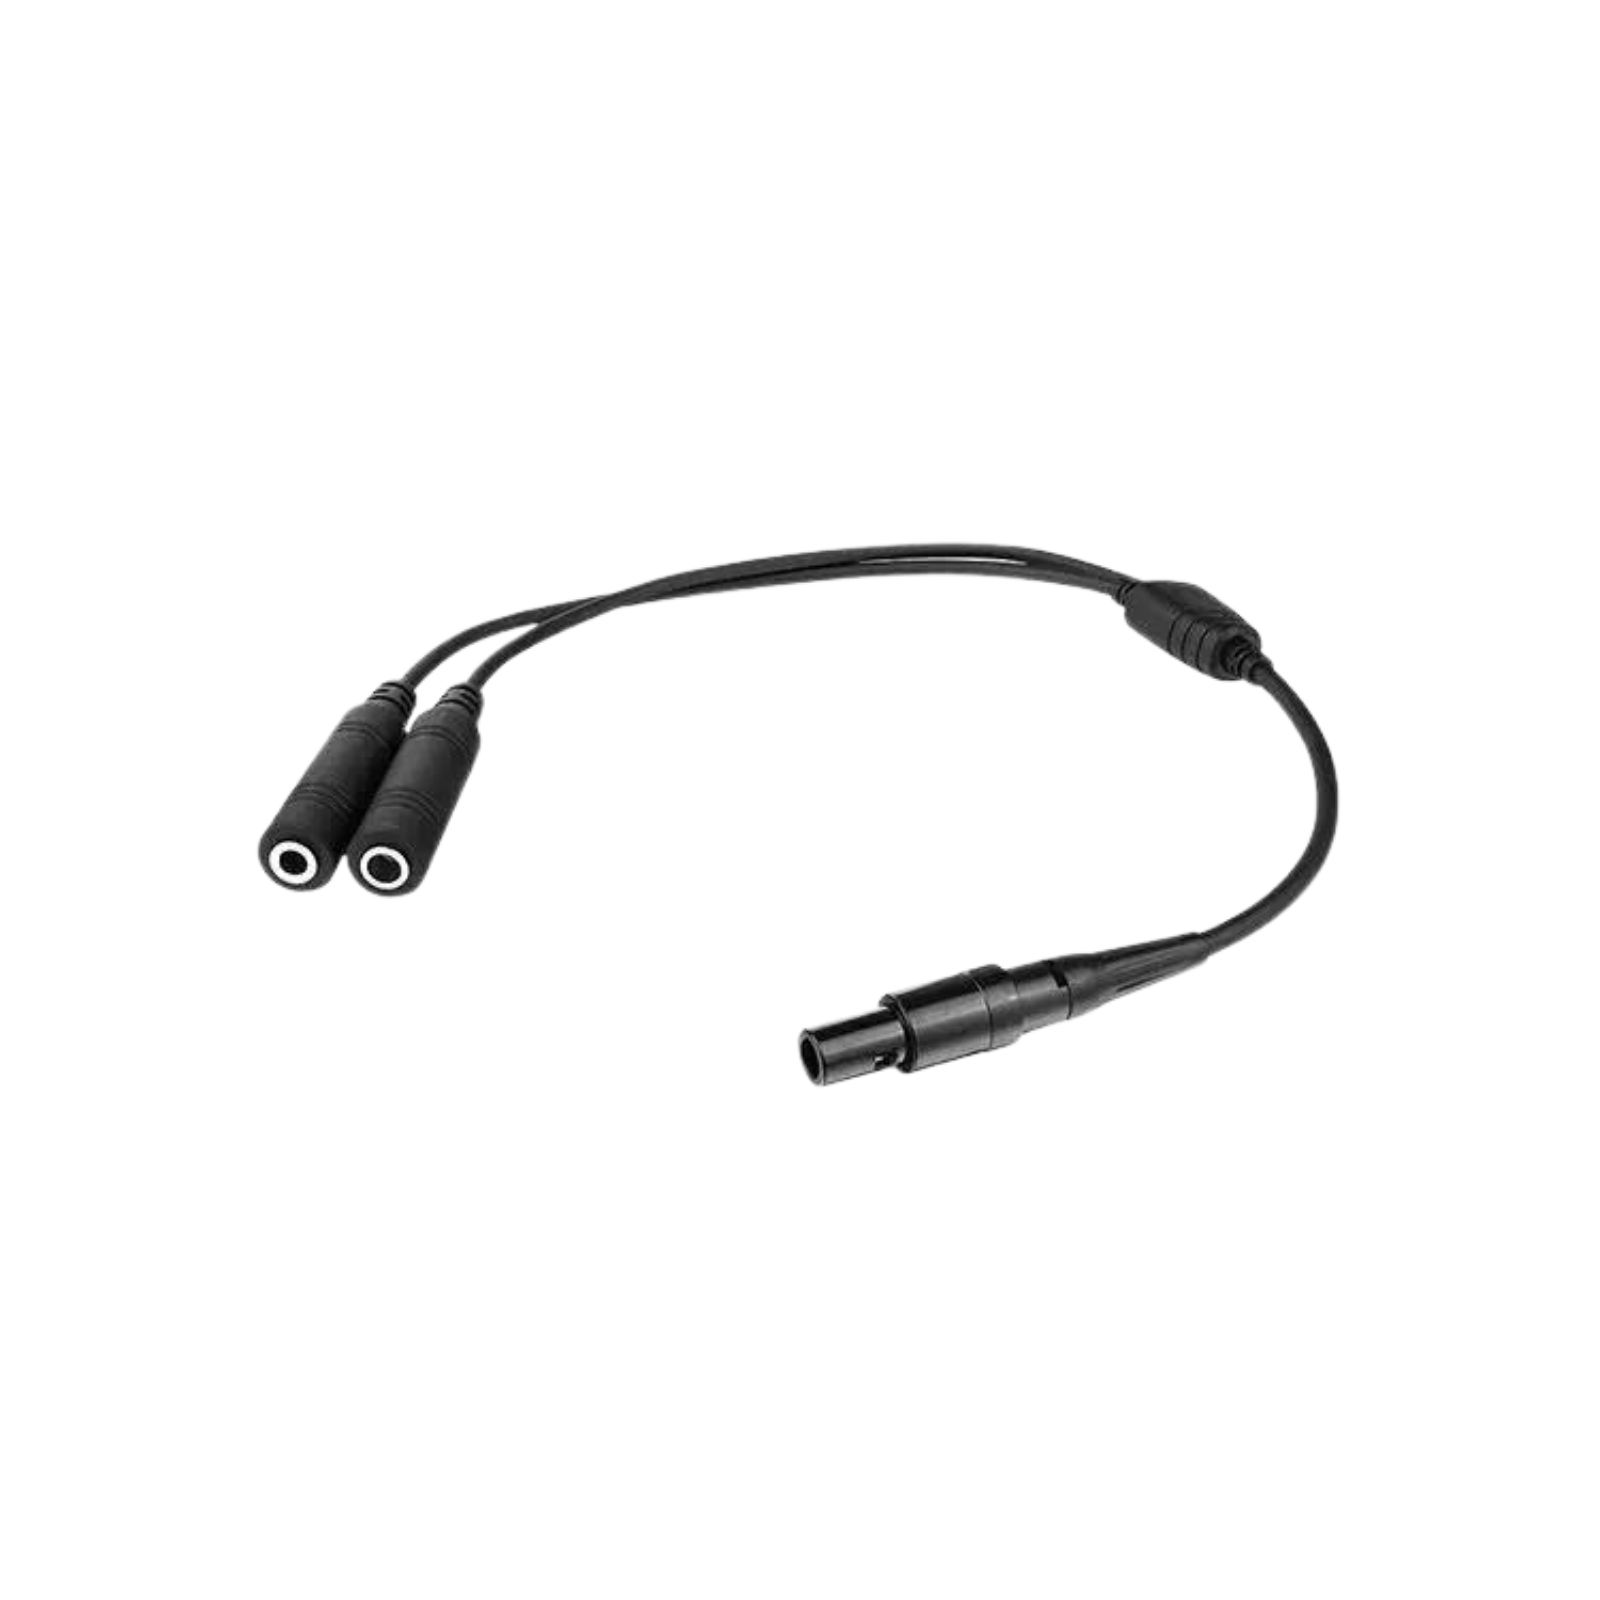 A20 Headset Cable - XLR Plug